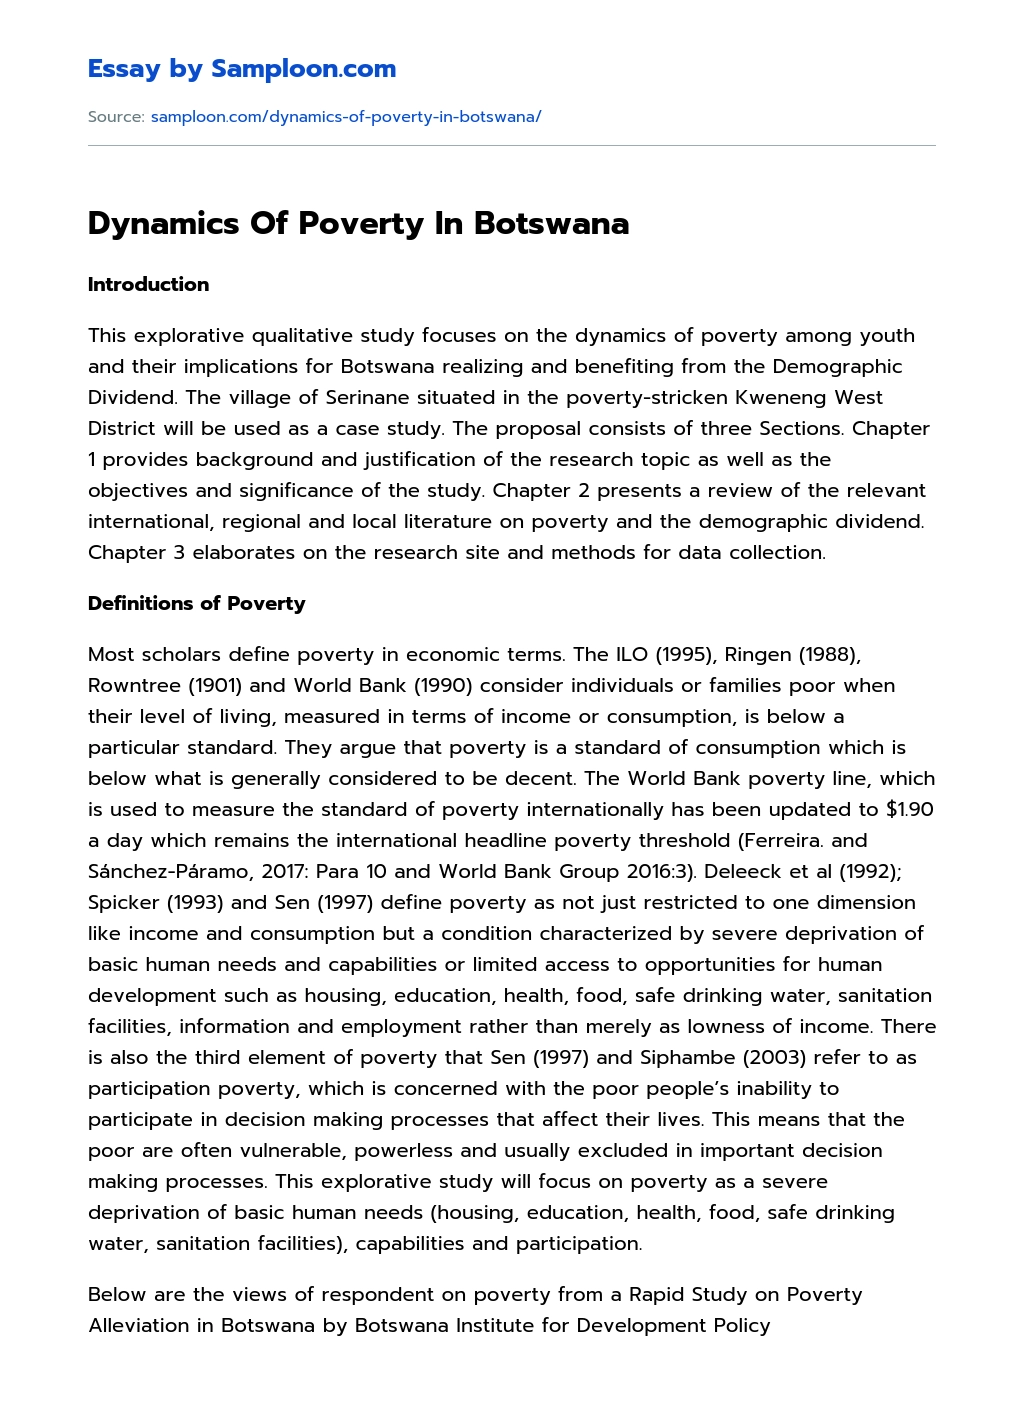 Dynamics Of Poverty In Botswana essay